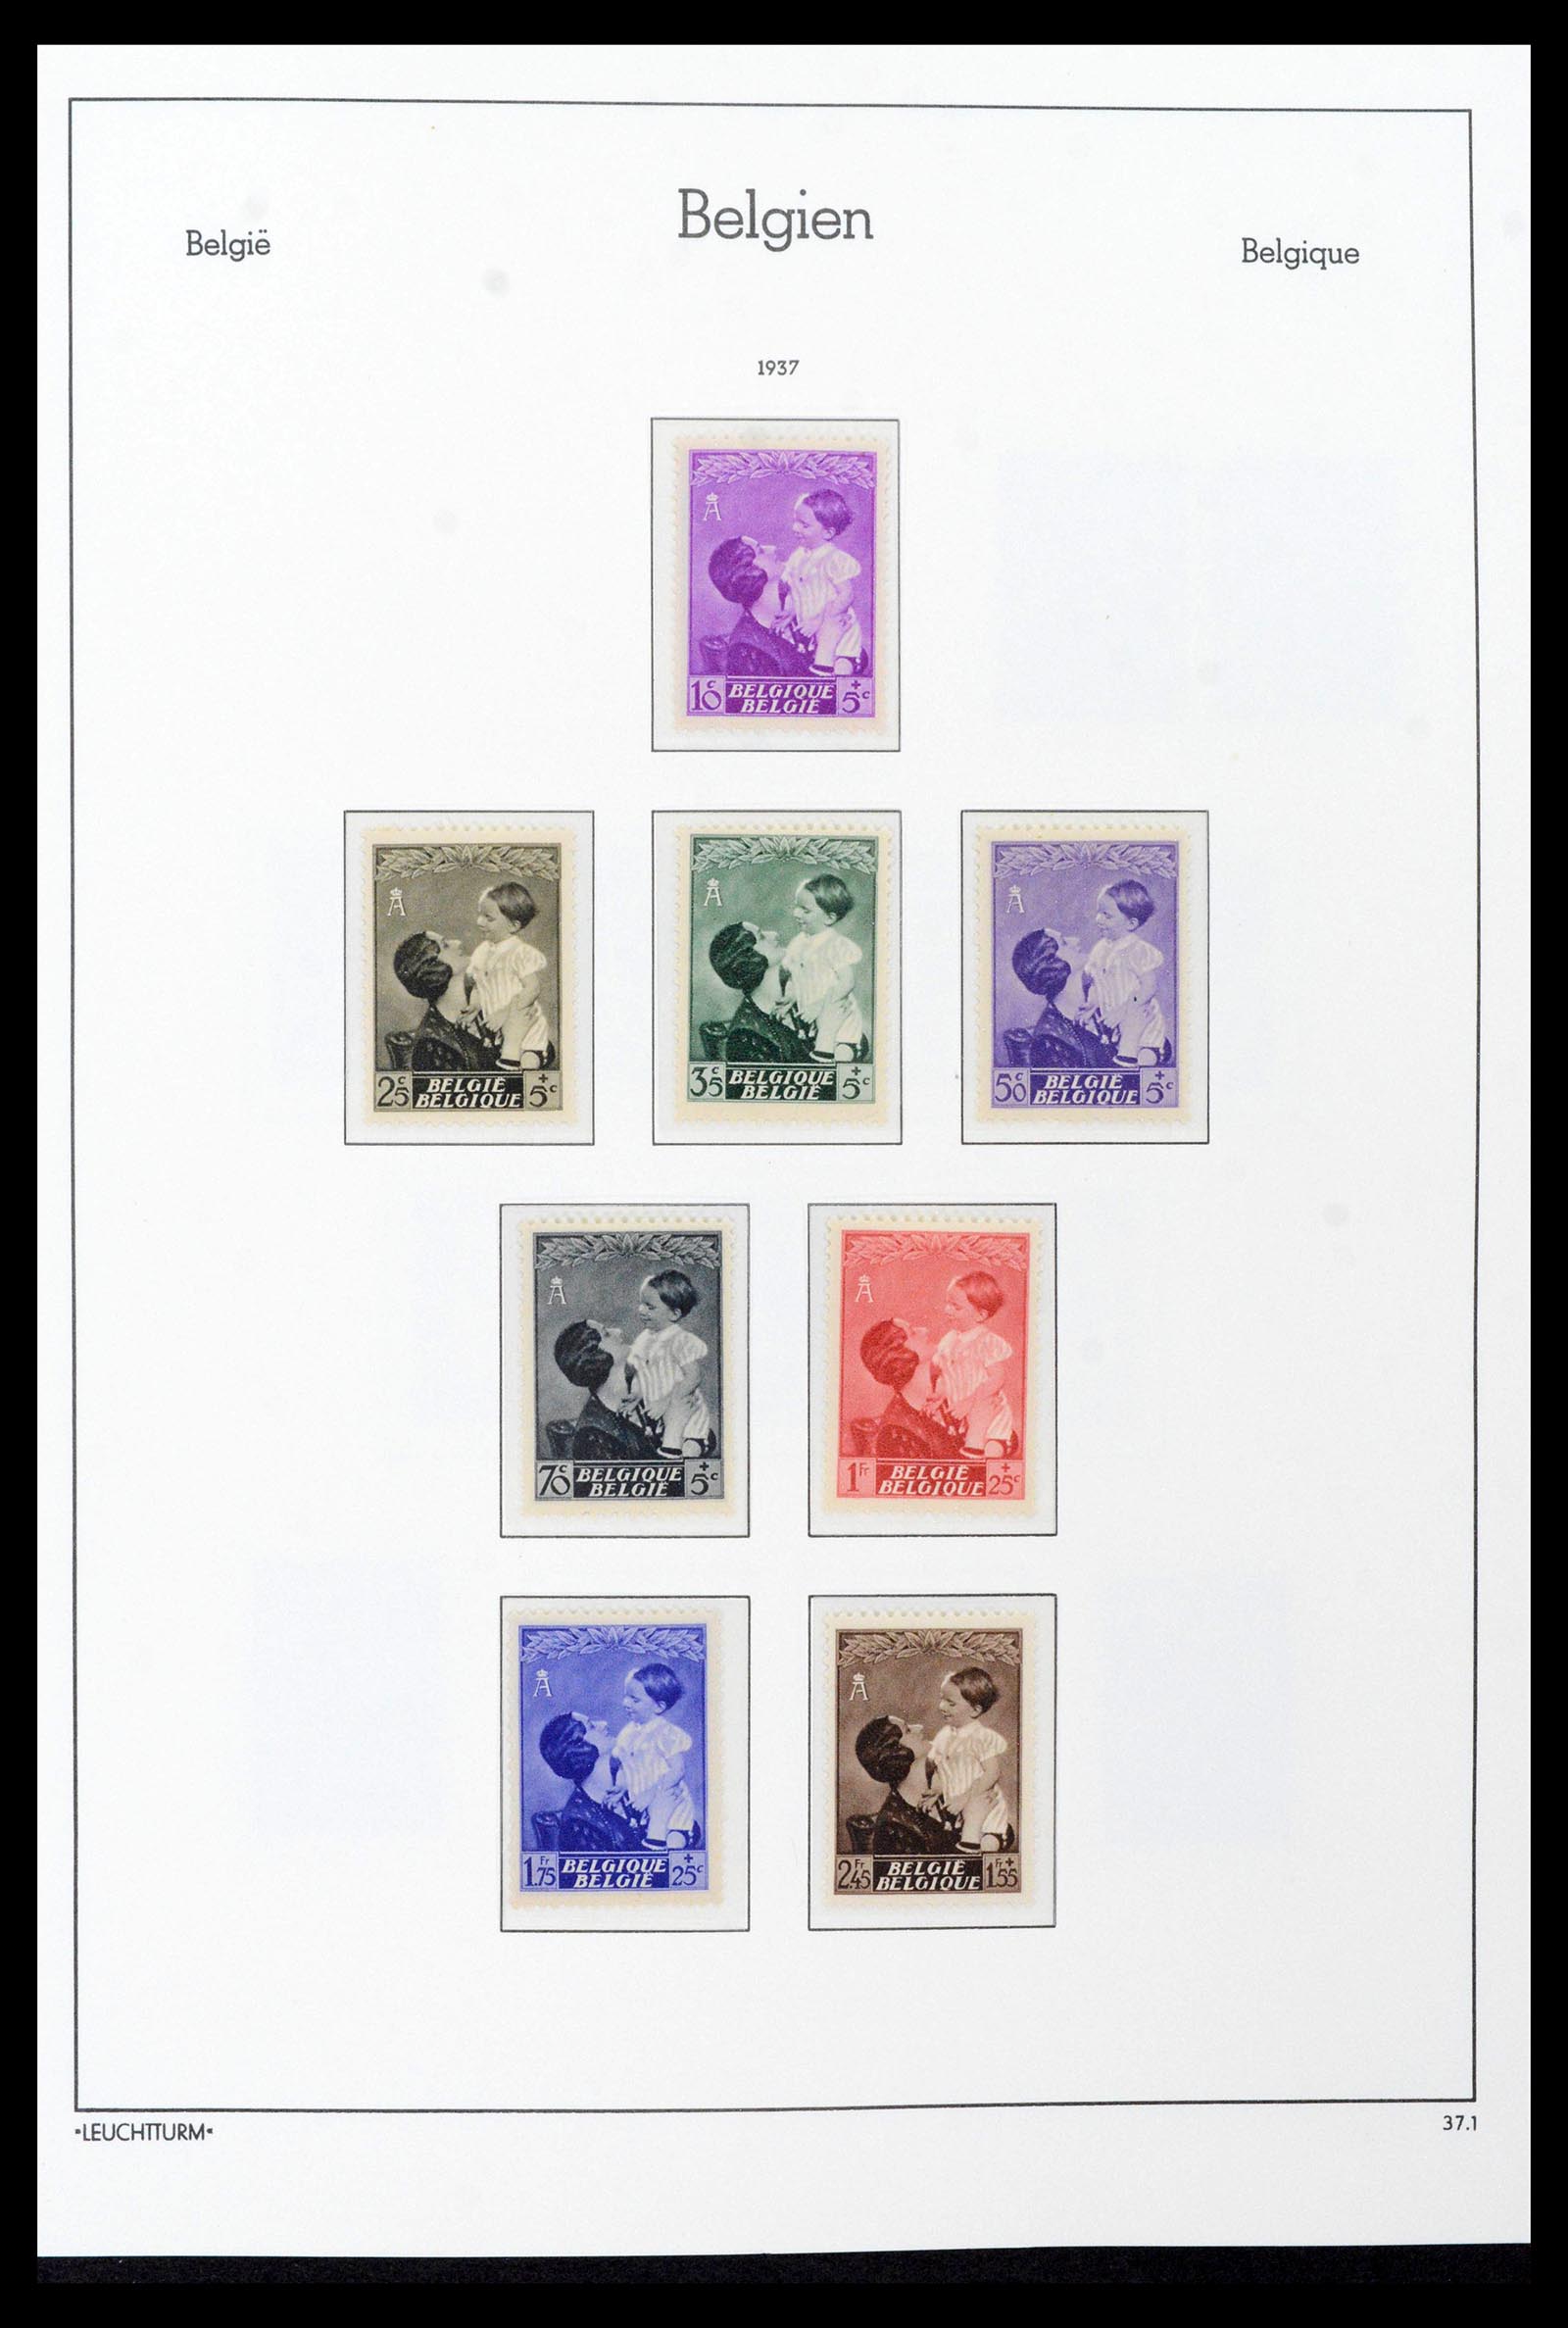 39137 0062 - Stamp collection 39137 Belgium 1849-2002.